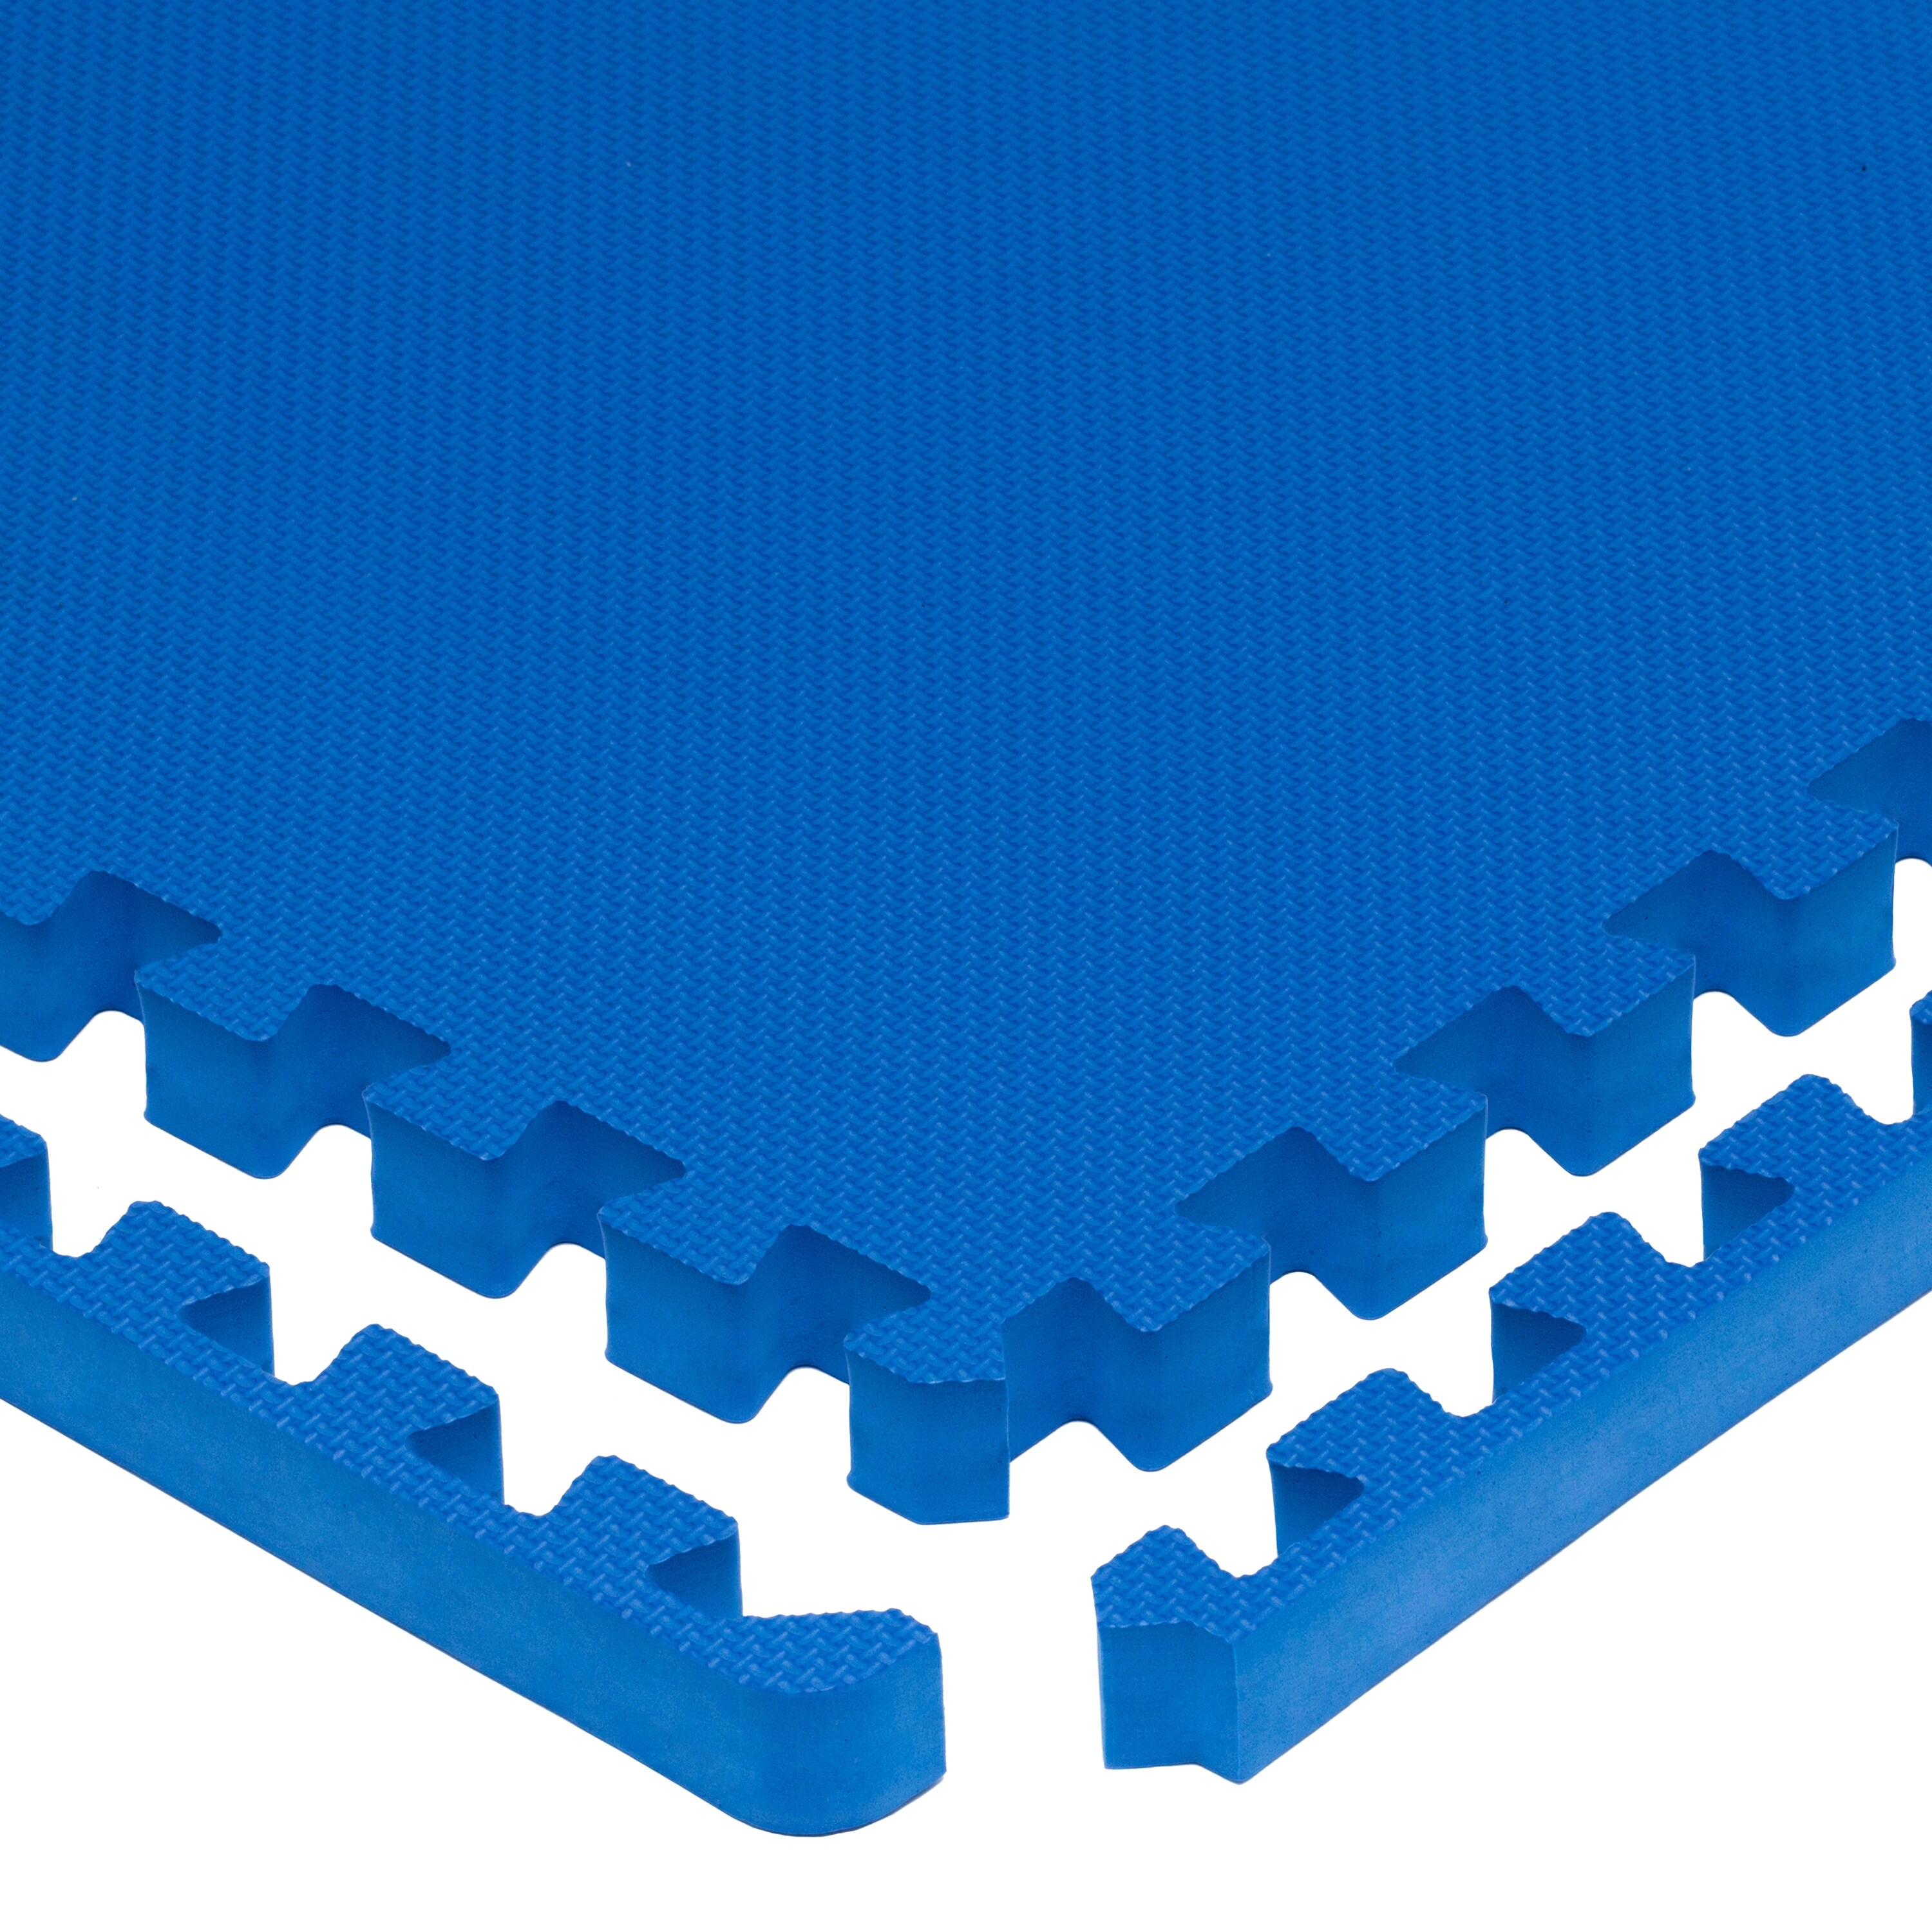 ProSource Extra Thick Puzzle Exercise Mat, 3/4, Eva Foam Interlocking tiles, Blue